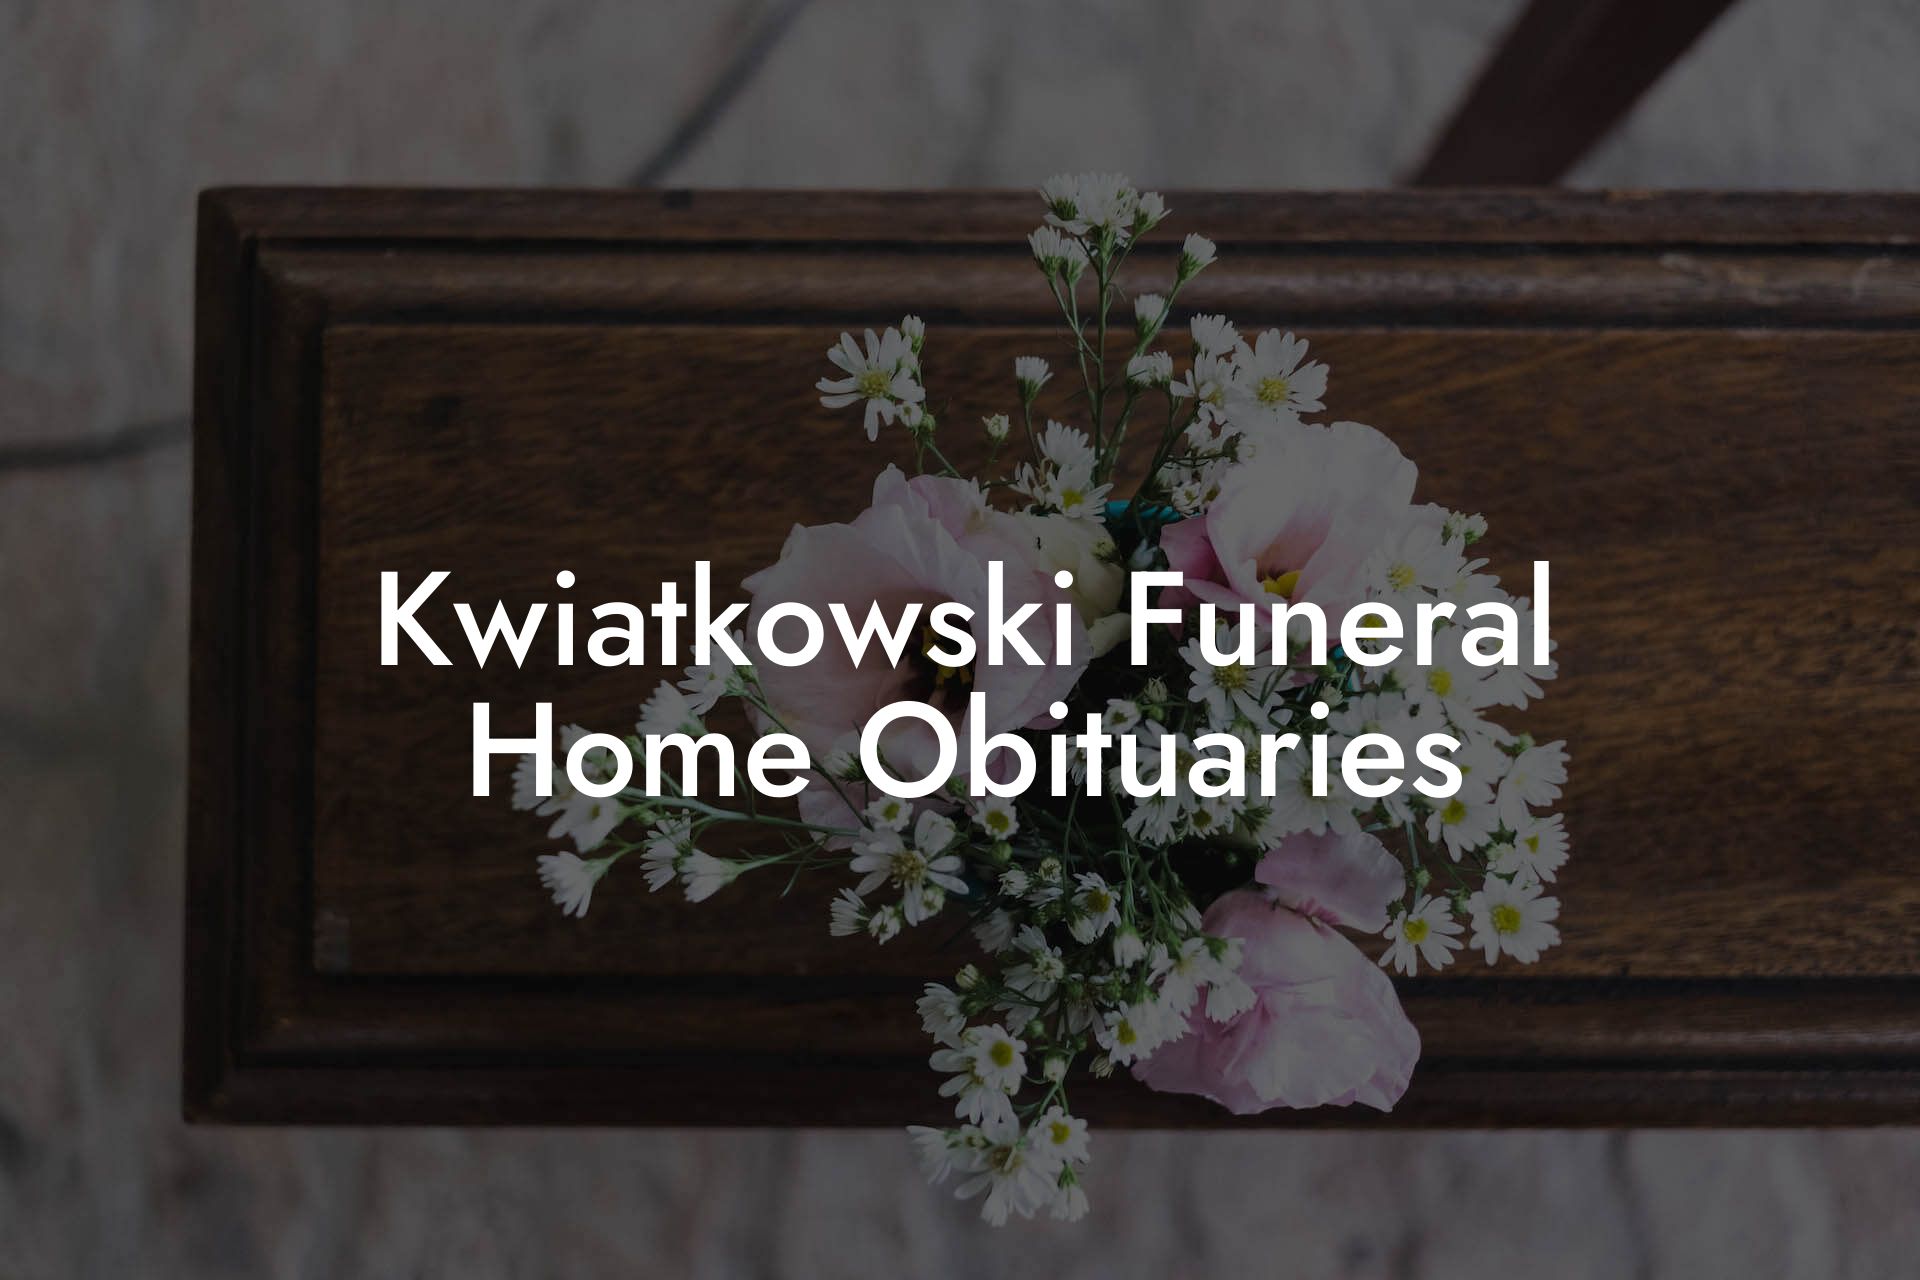 Kwiatkowski Funeral Home Obituaries